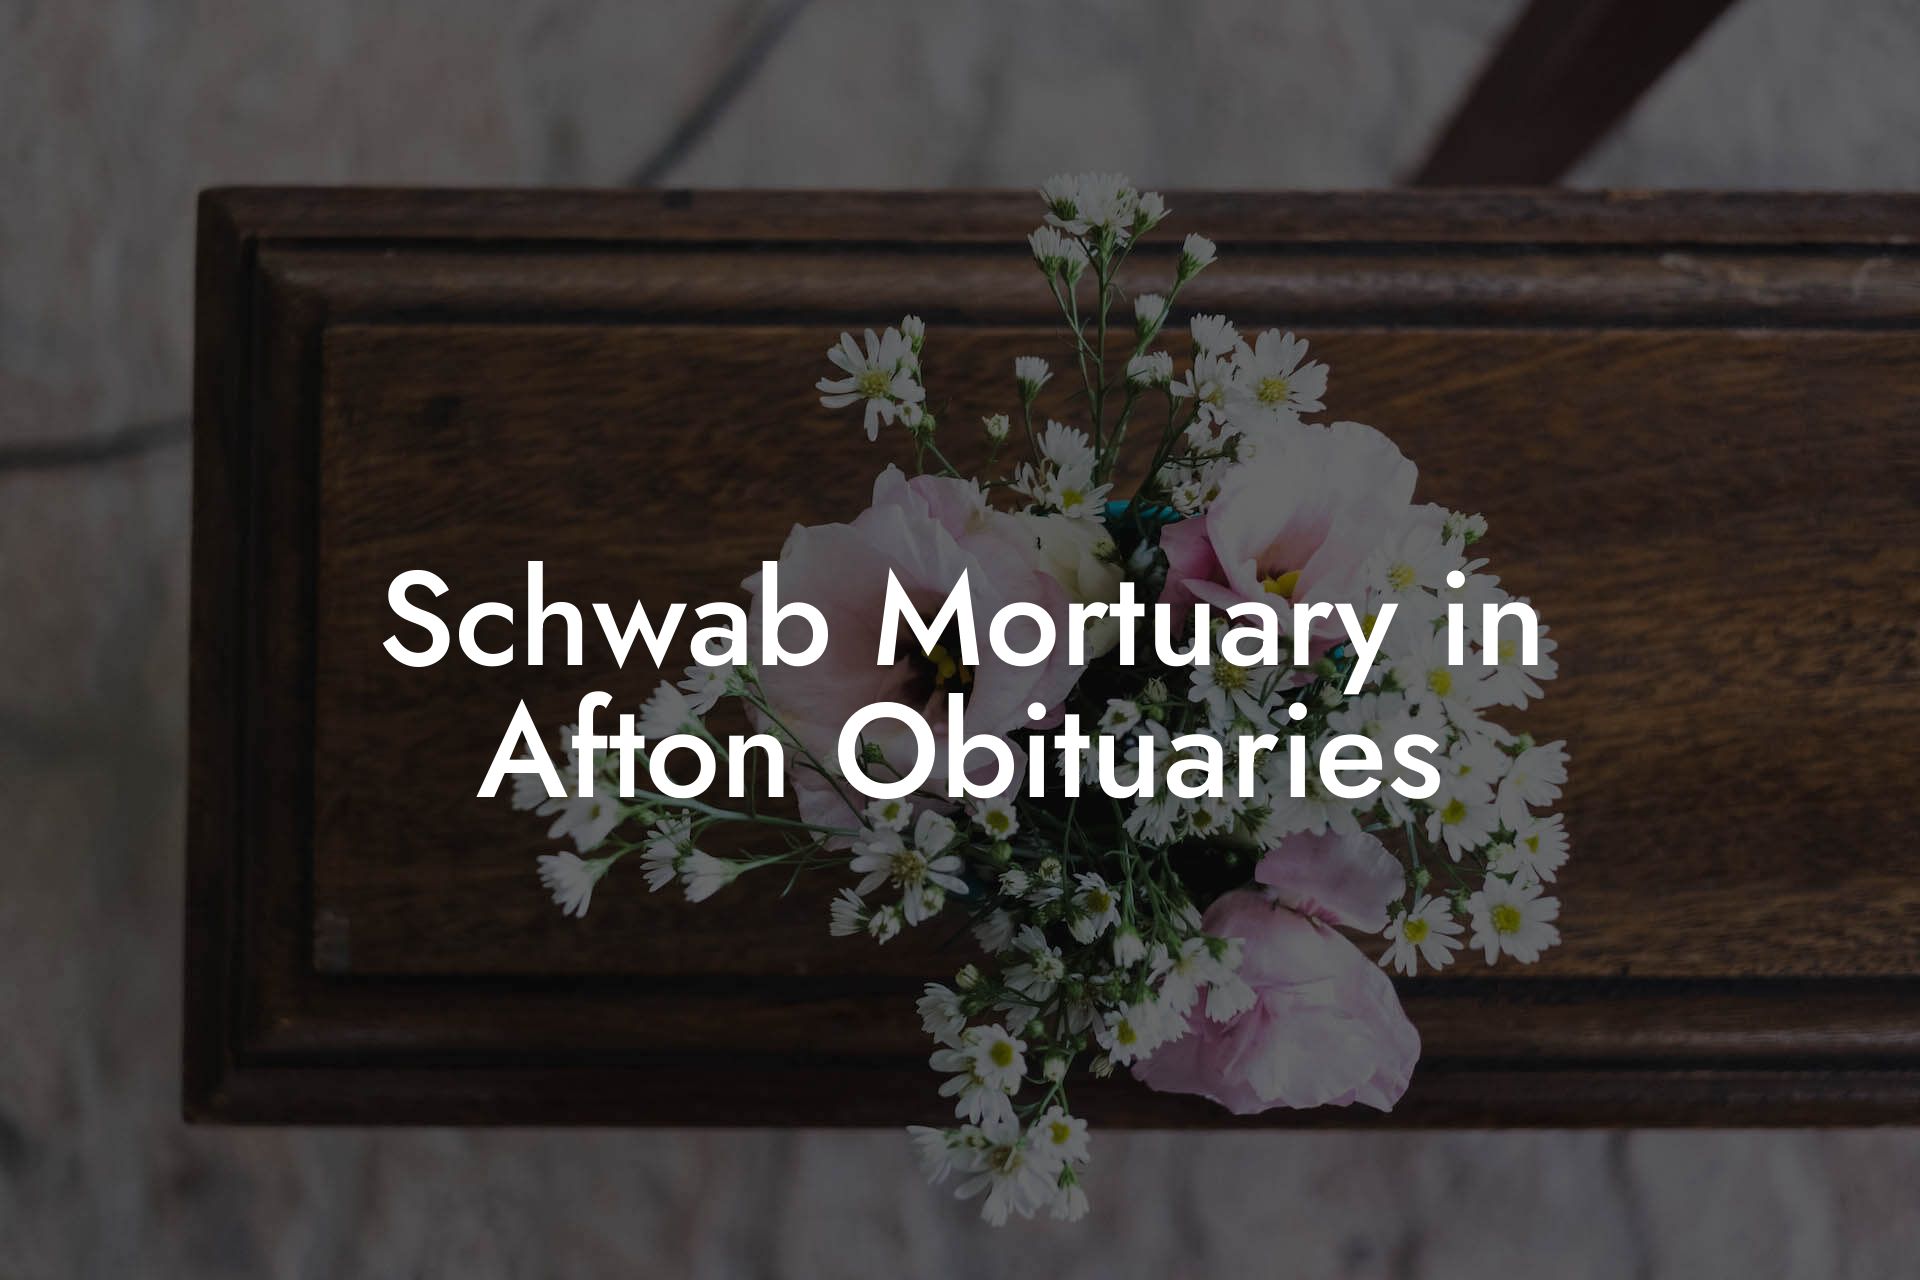 Schwab Mortuary in Afton Obituaries